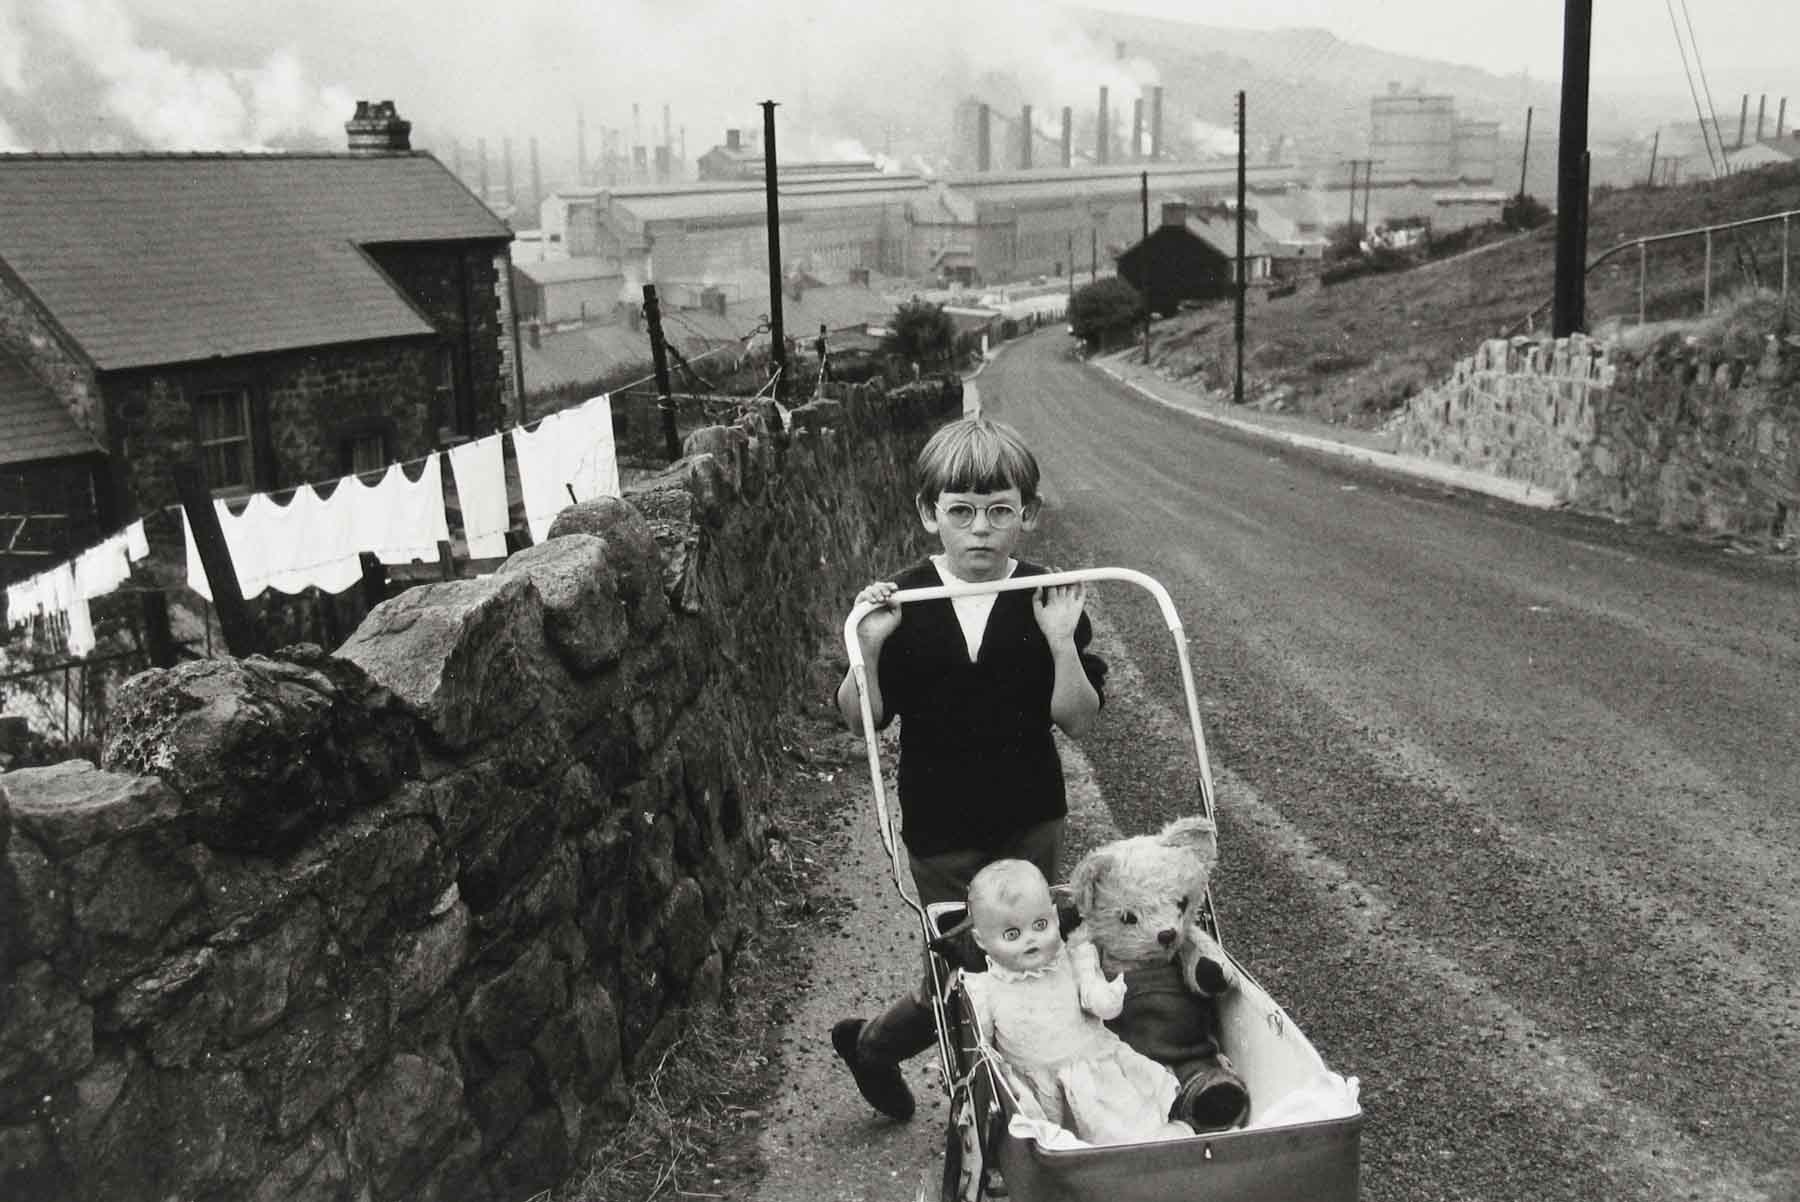 Wales, 1965